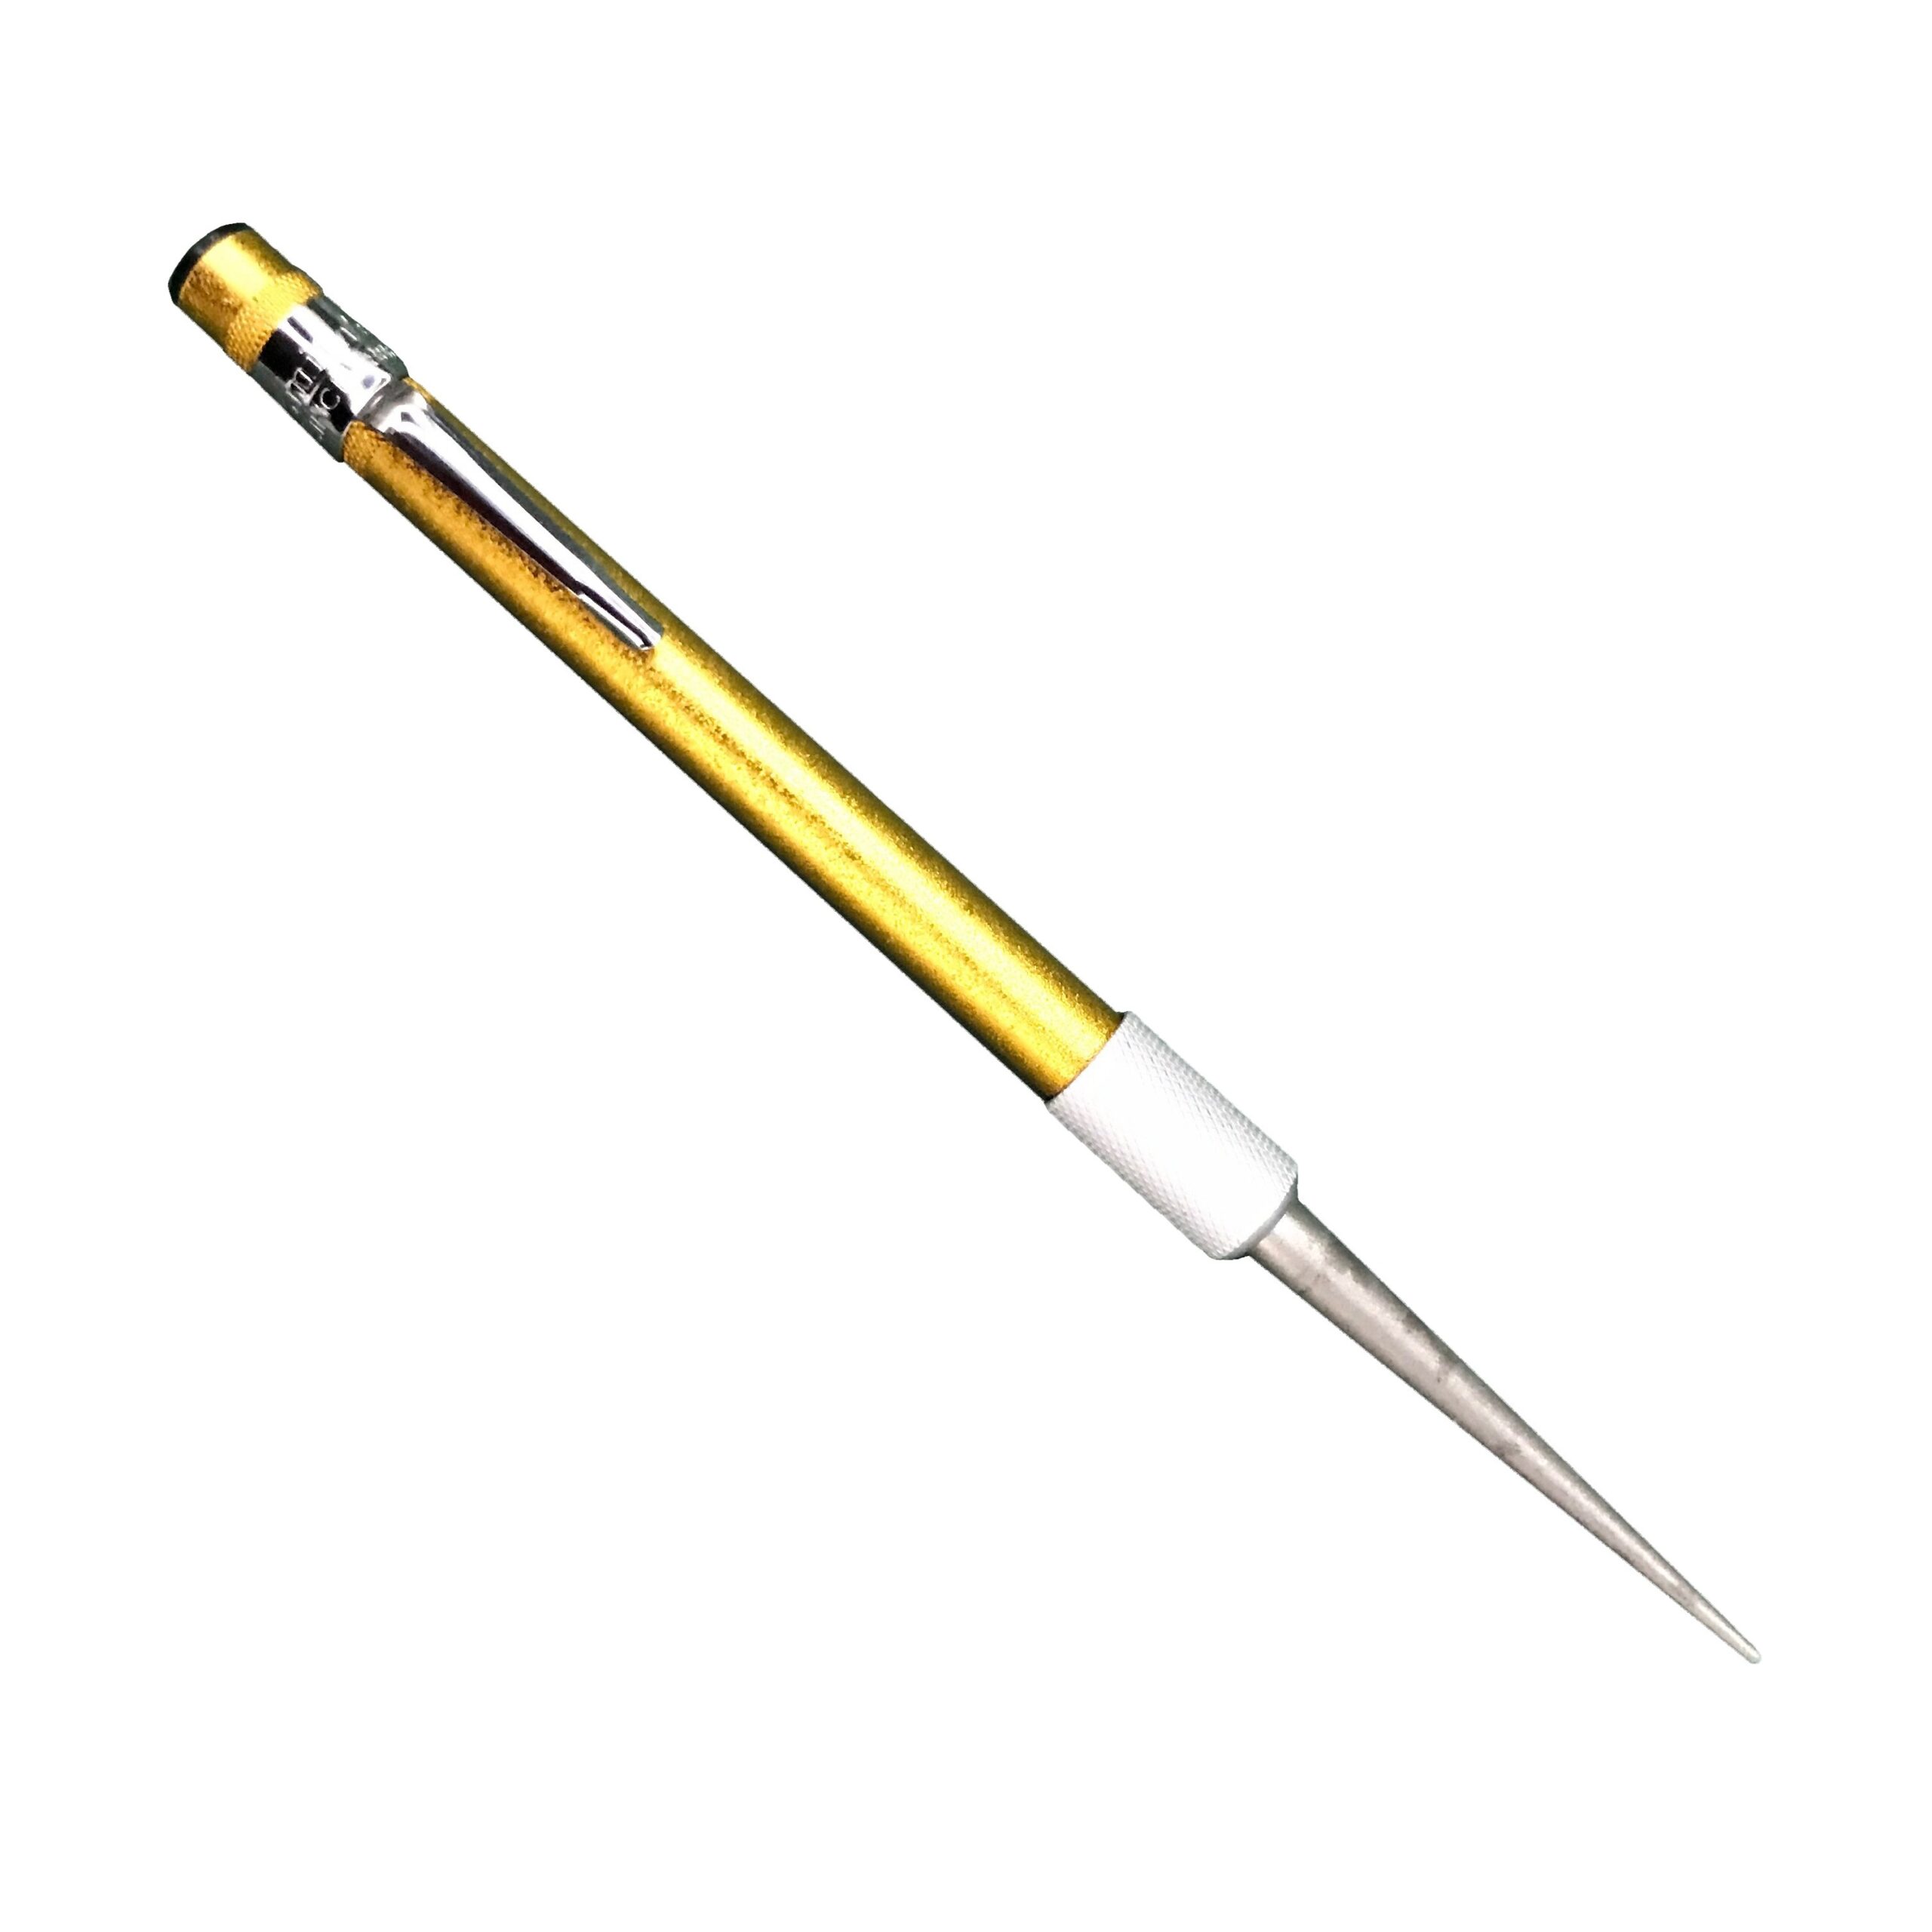 Smith's manual pocket knife sharpener